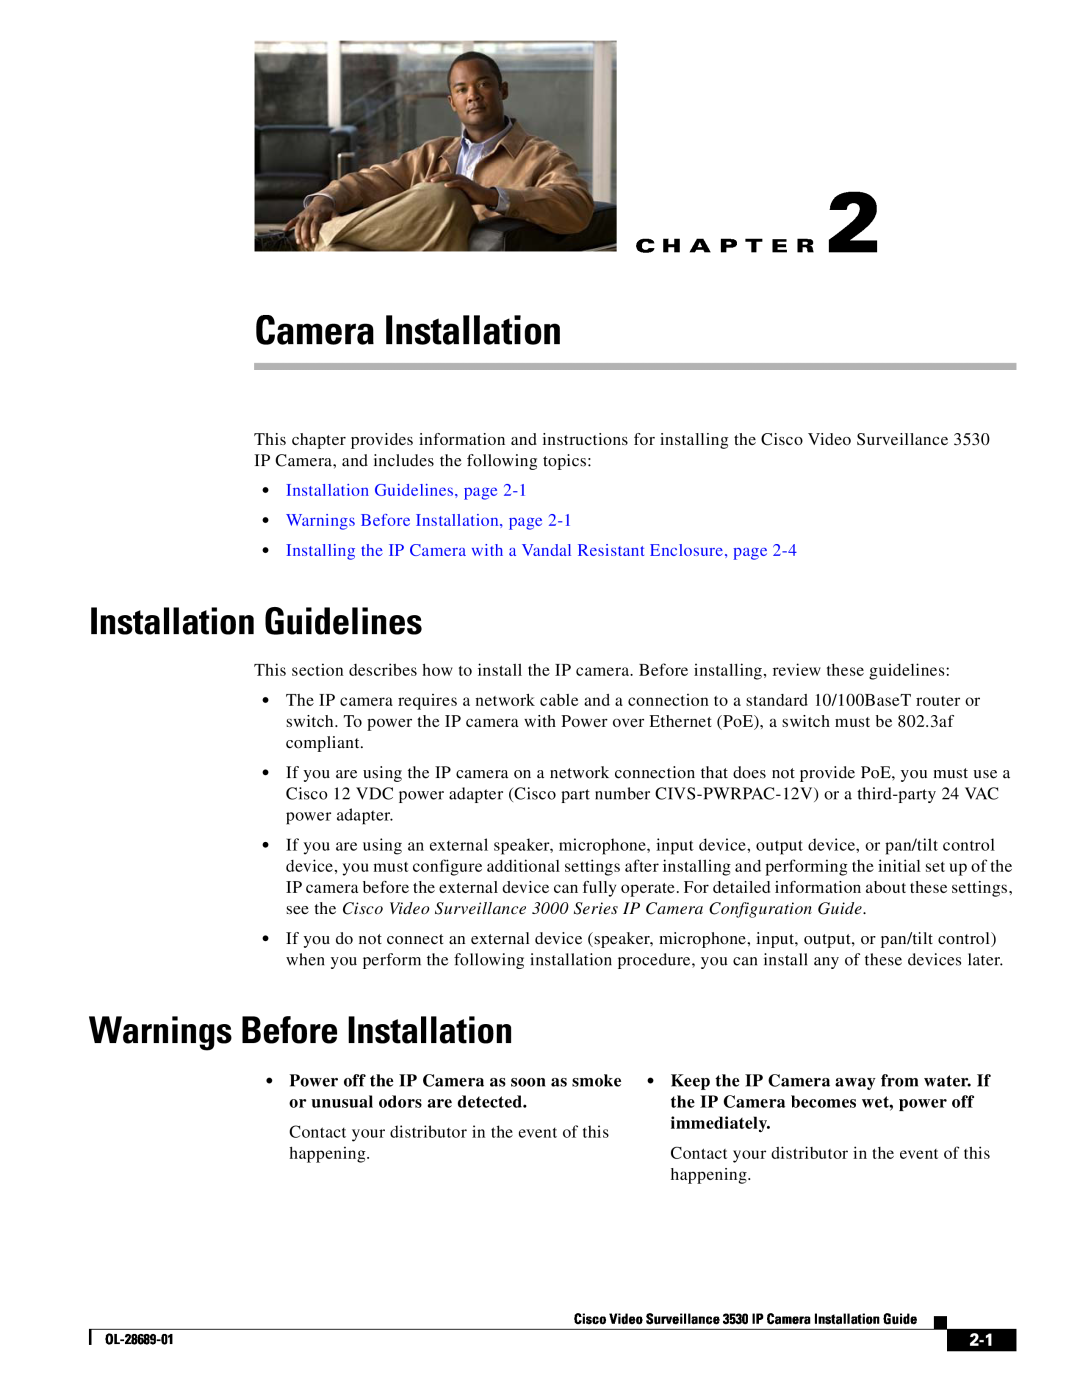 Cisco Systems 3530 Camera Installation, Installation Guidelines, Warnings Before Installation, immediately, happening 